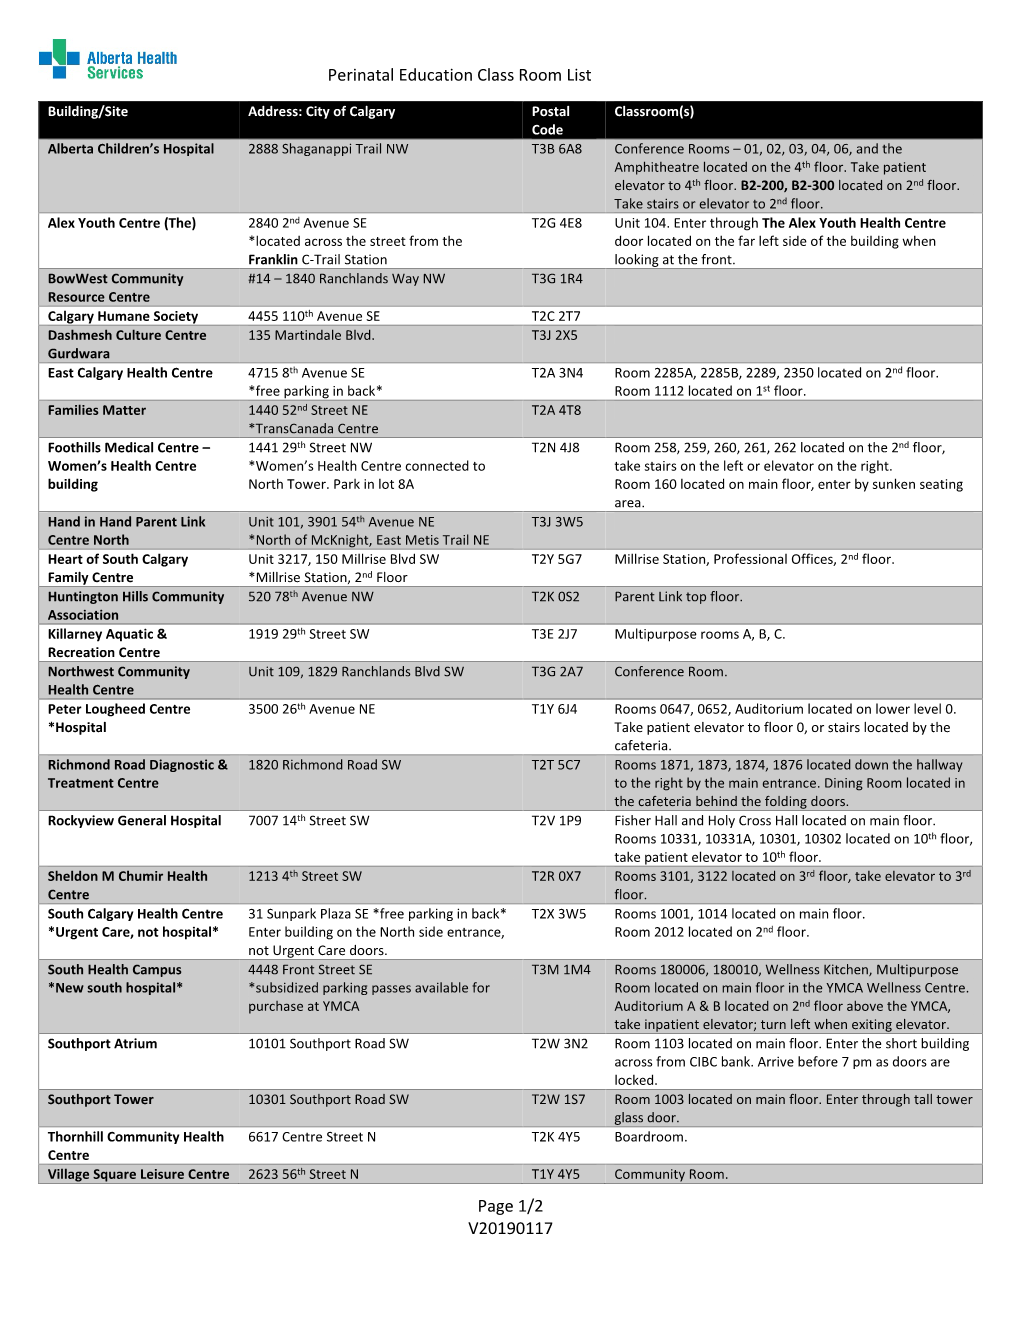 Page 1/2 V20190117 Perinatal Education Class Room List